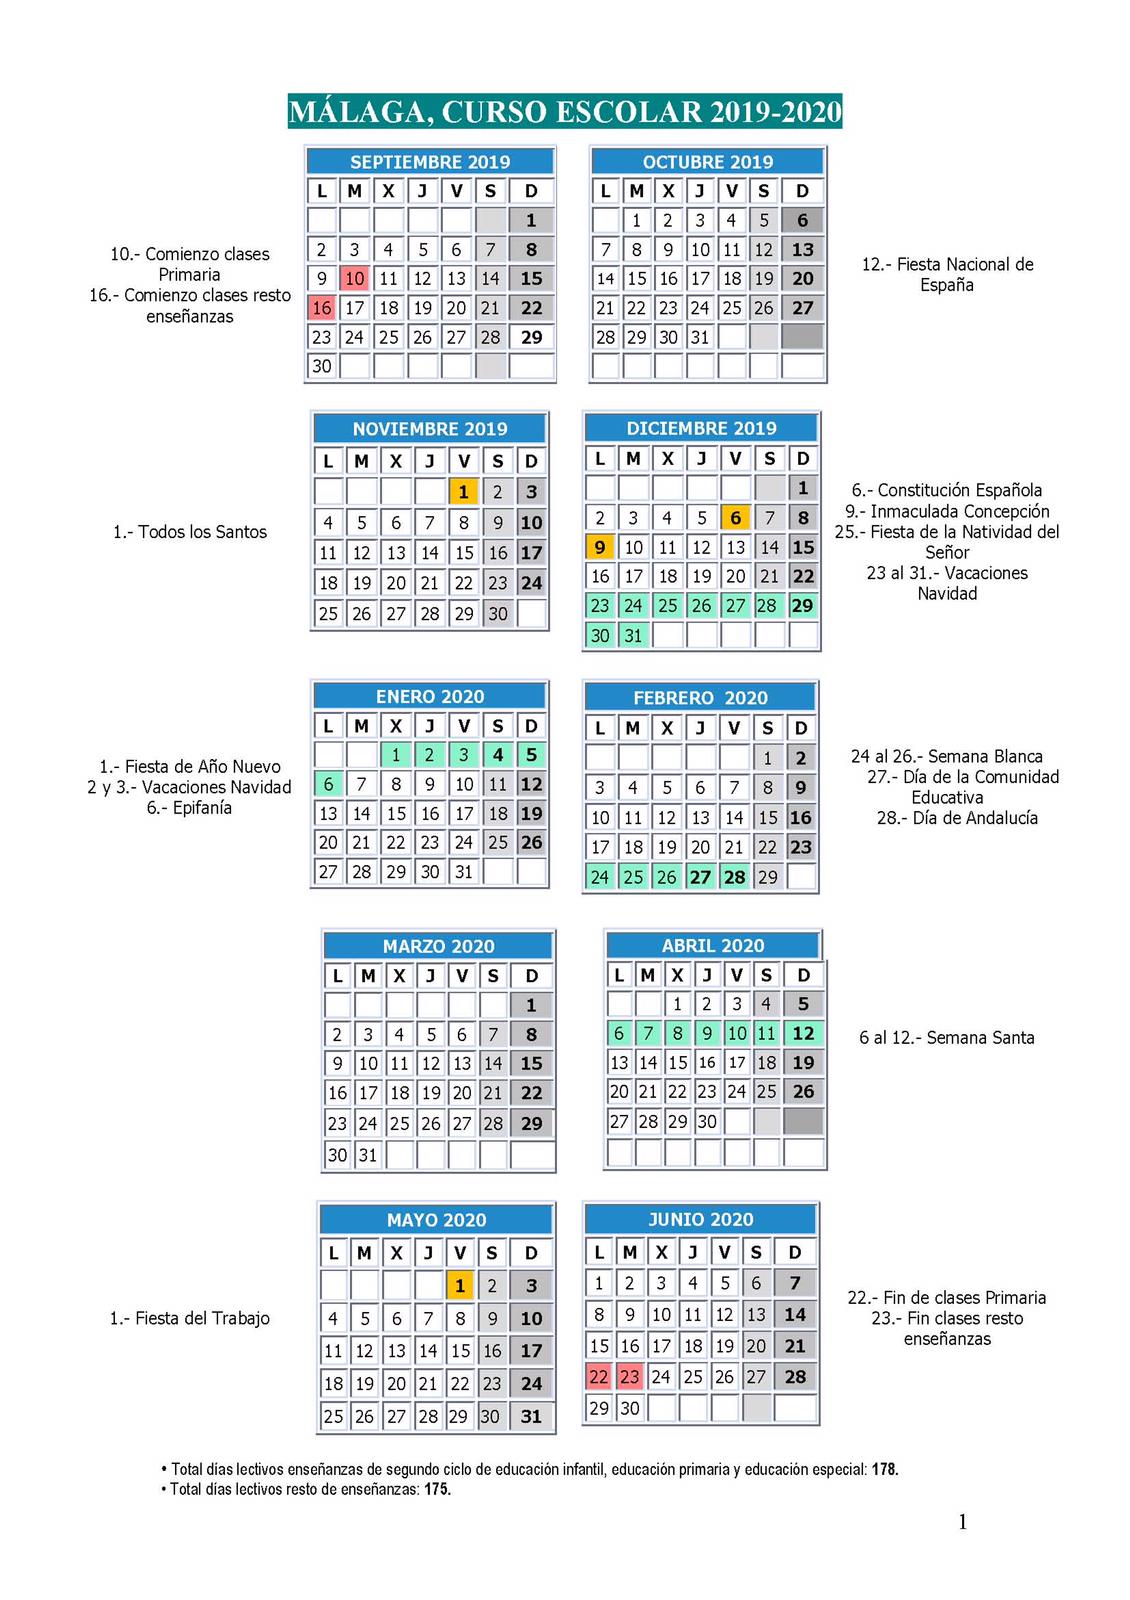 /ficheros/actualidad/calendario escolar curso 19-20.jpg